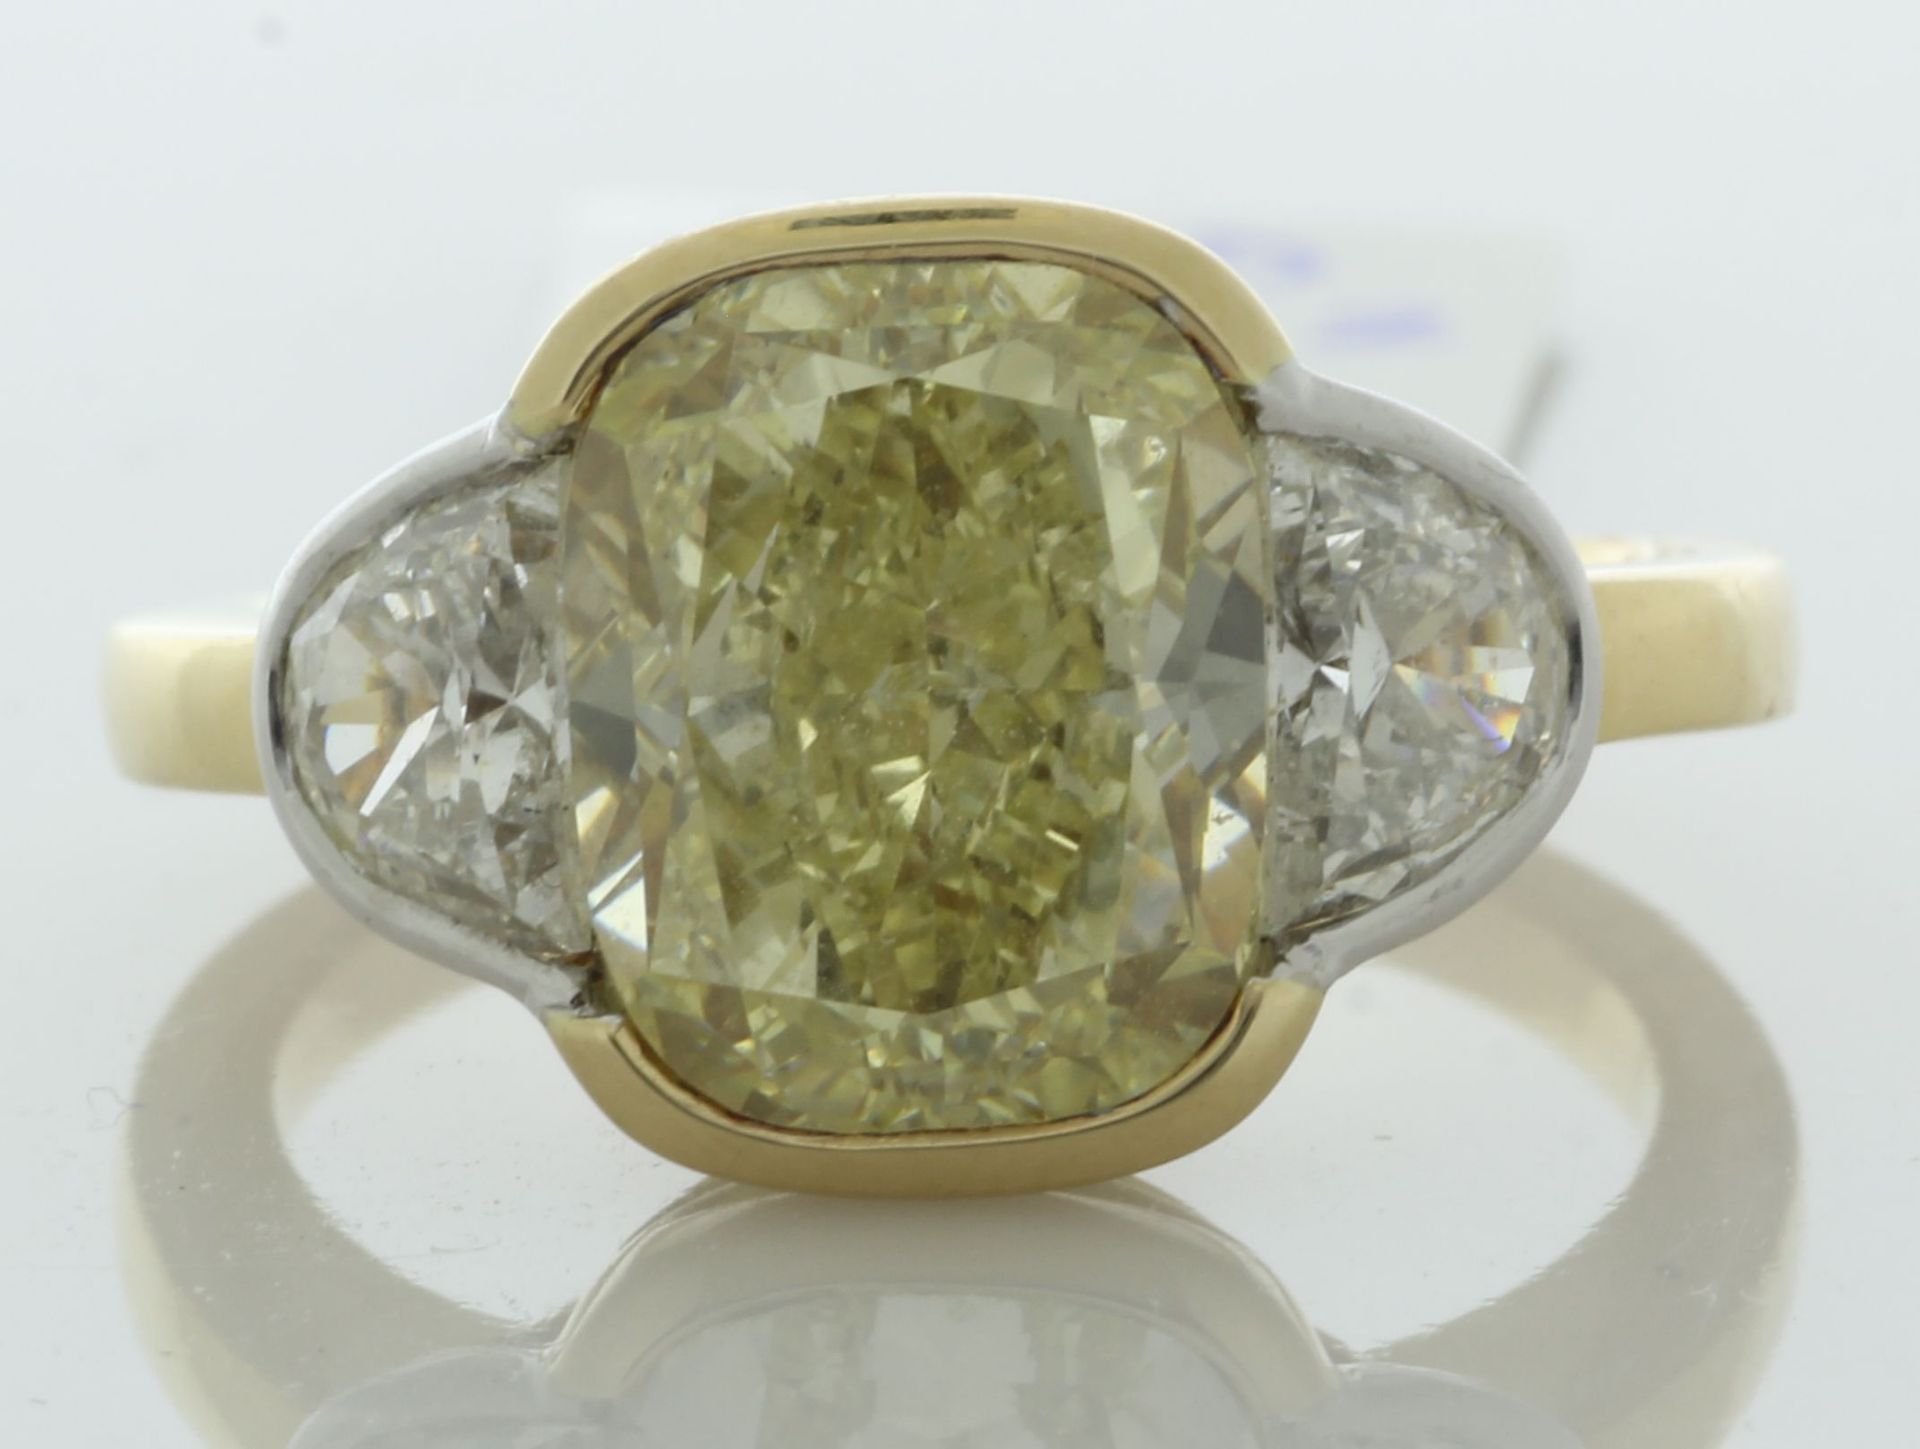 18ct Yellow Gold Three Stone Diamond Ring (5.02) 6.02 Carats - Valued By IDI £463,465.00 - A